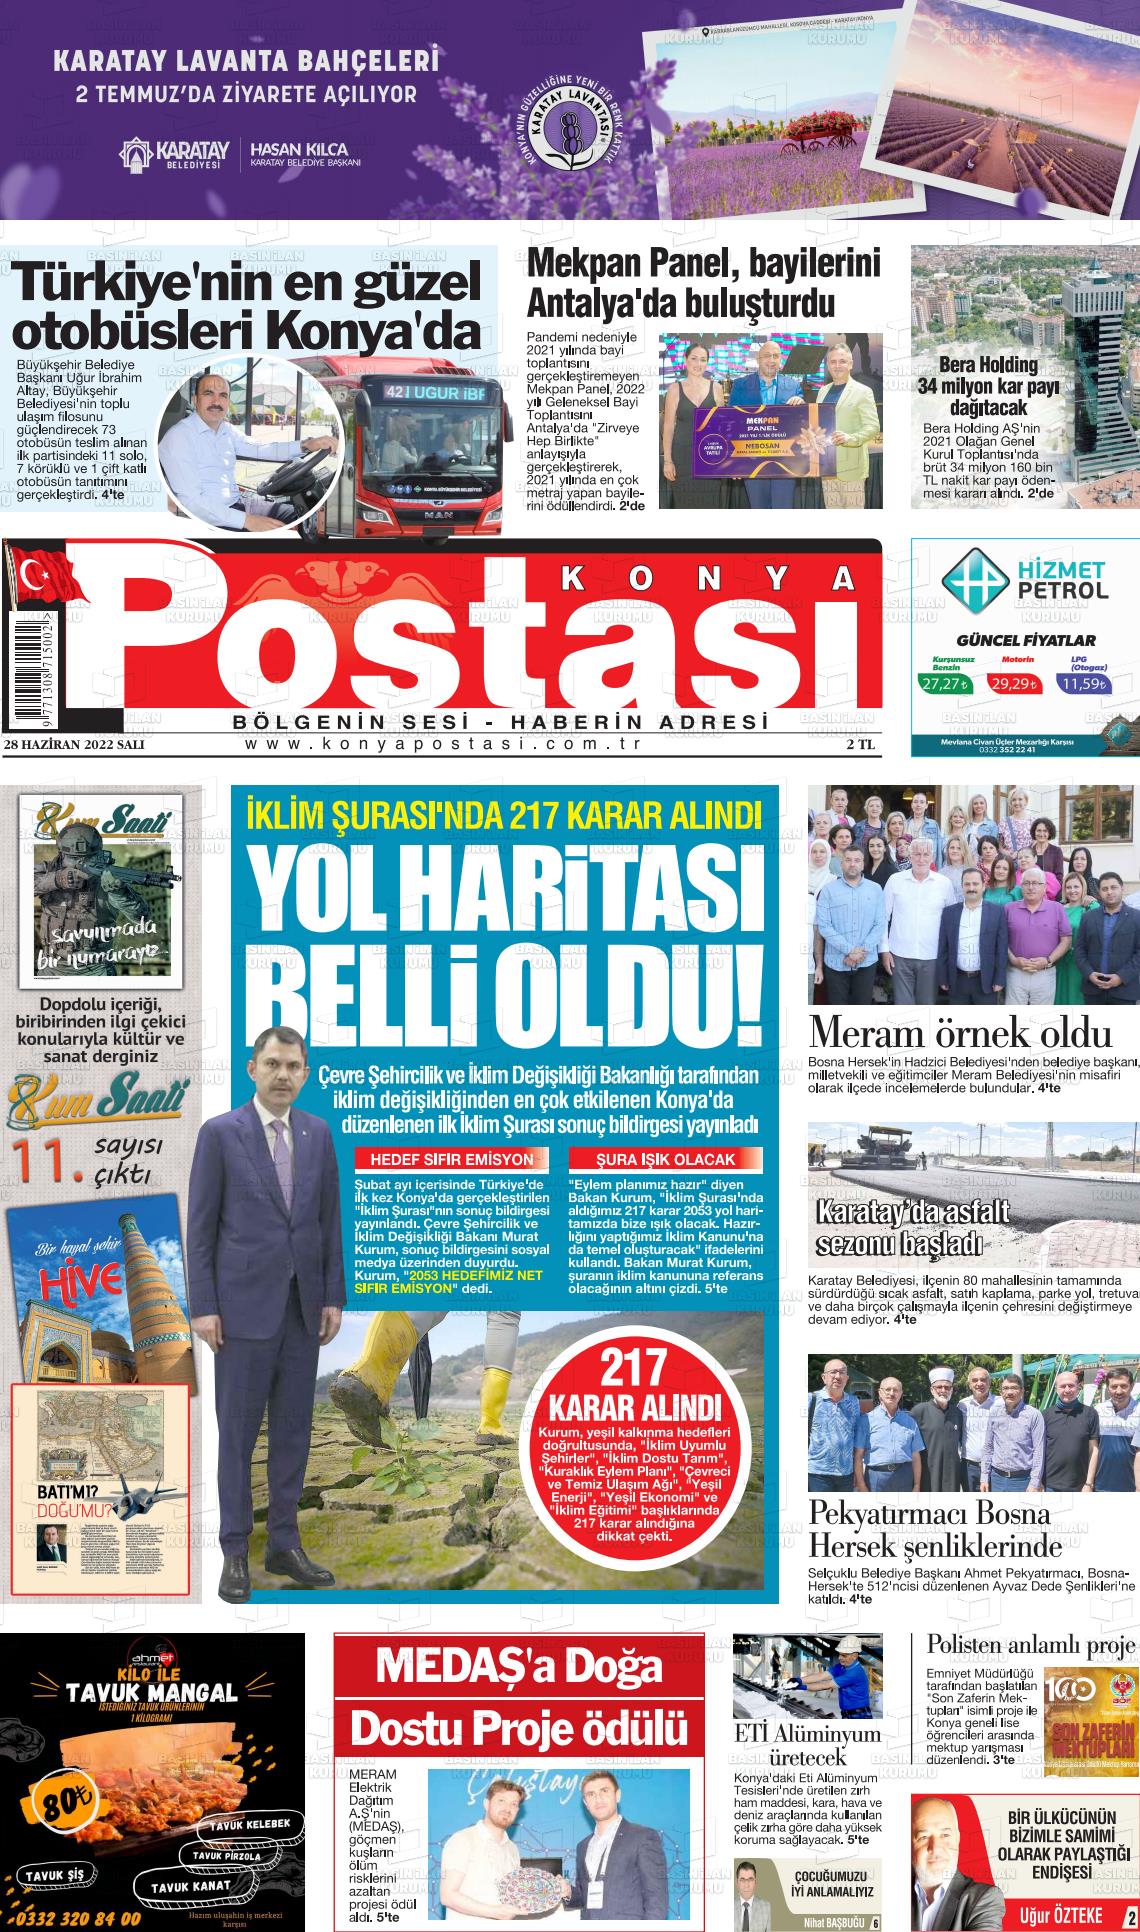 28 Haziran 2022 Konya Postası Gazete Manşeti